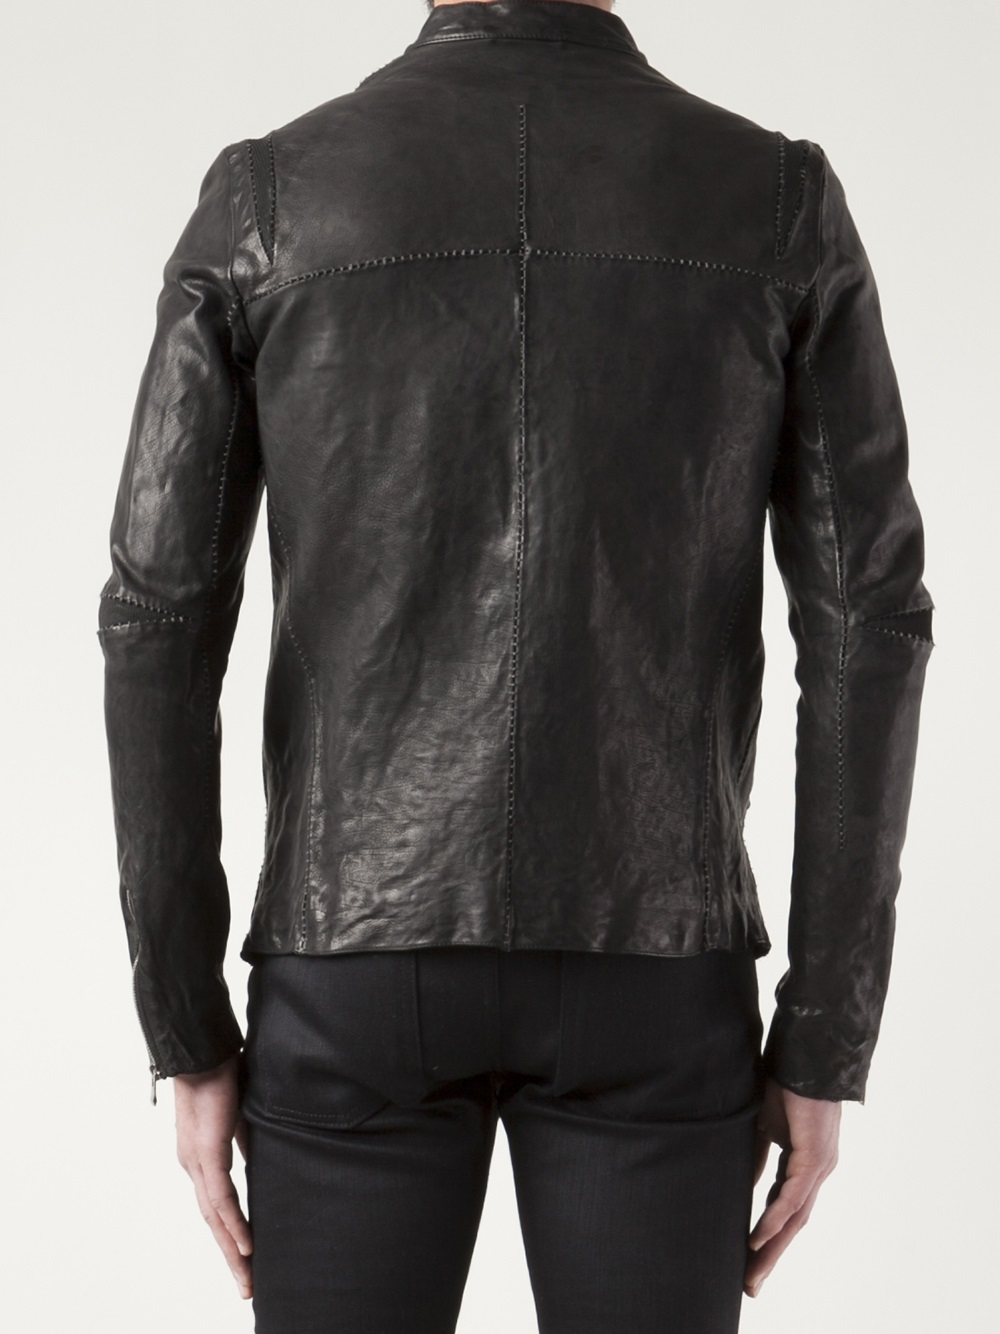 Lyst - Incarnation Leather Zip Jacket in Black for Men